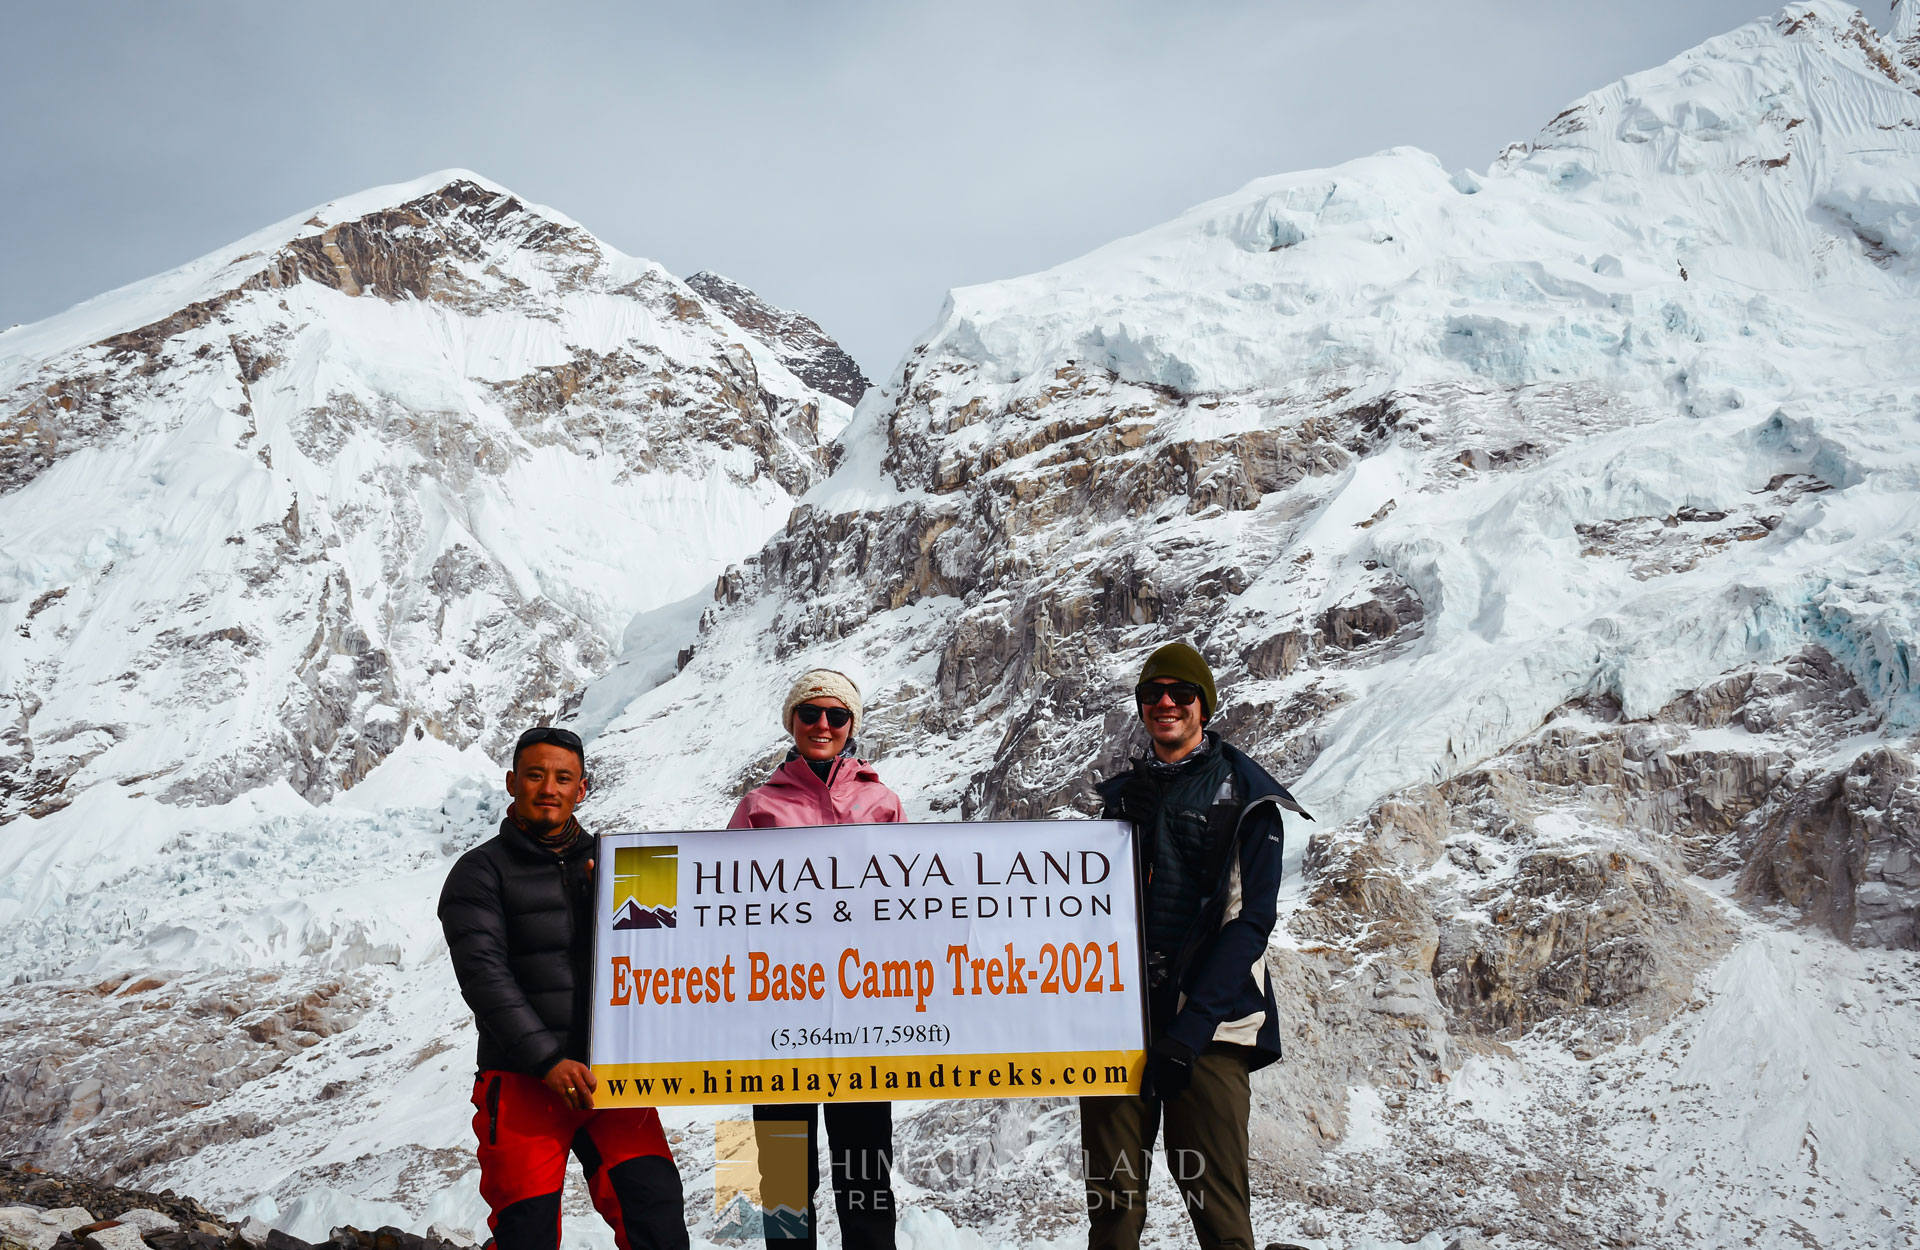 Capture the awe-inspiring beauty of Everest Base Camp